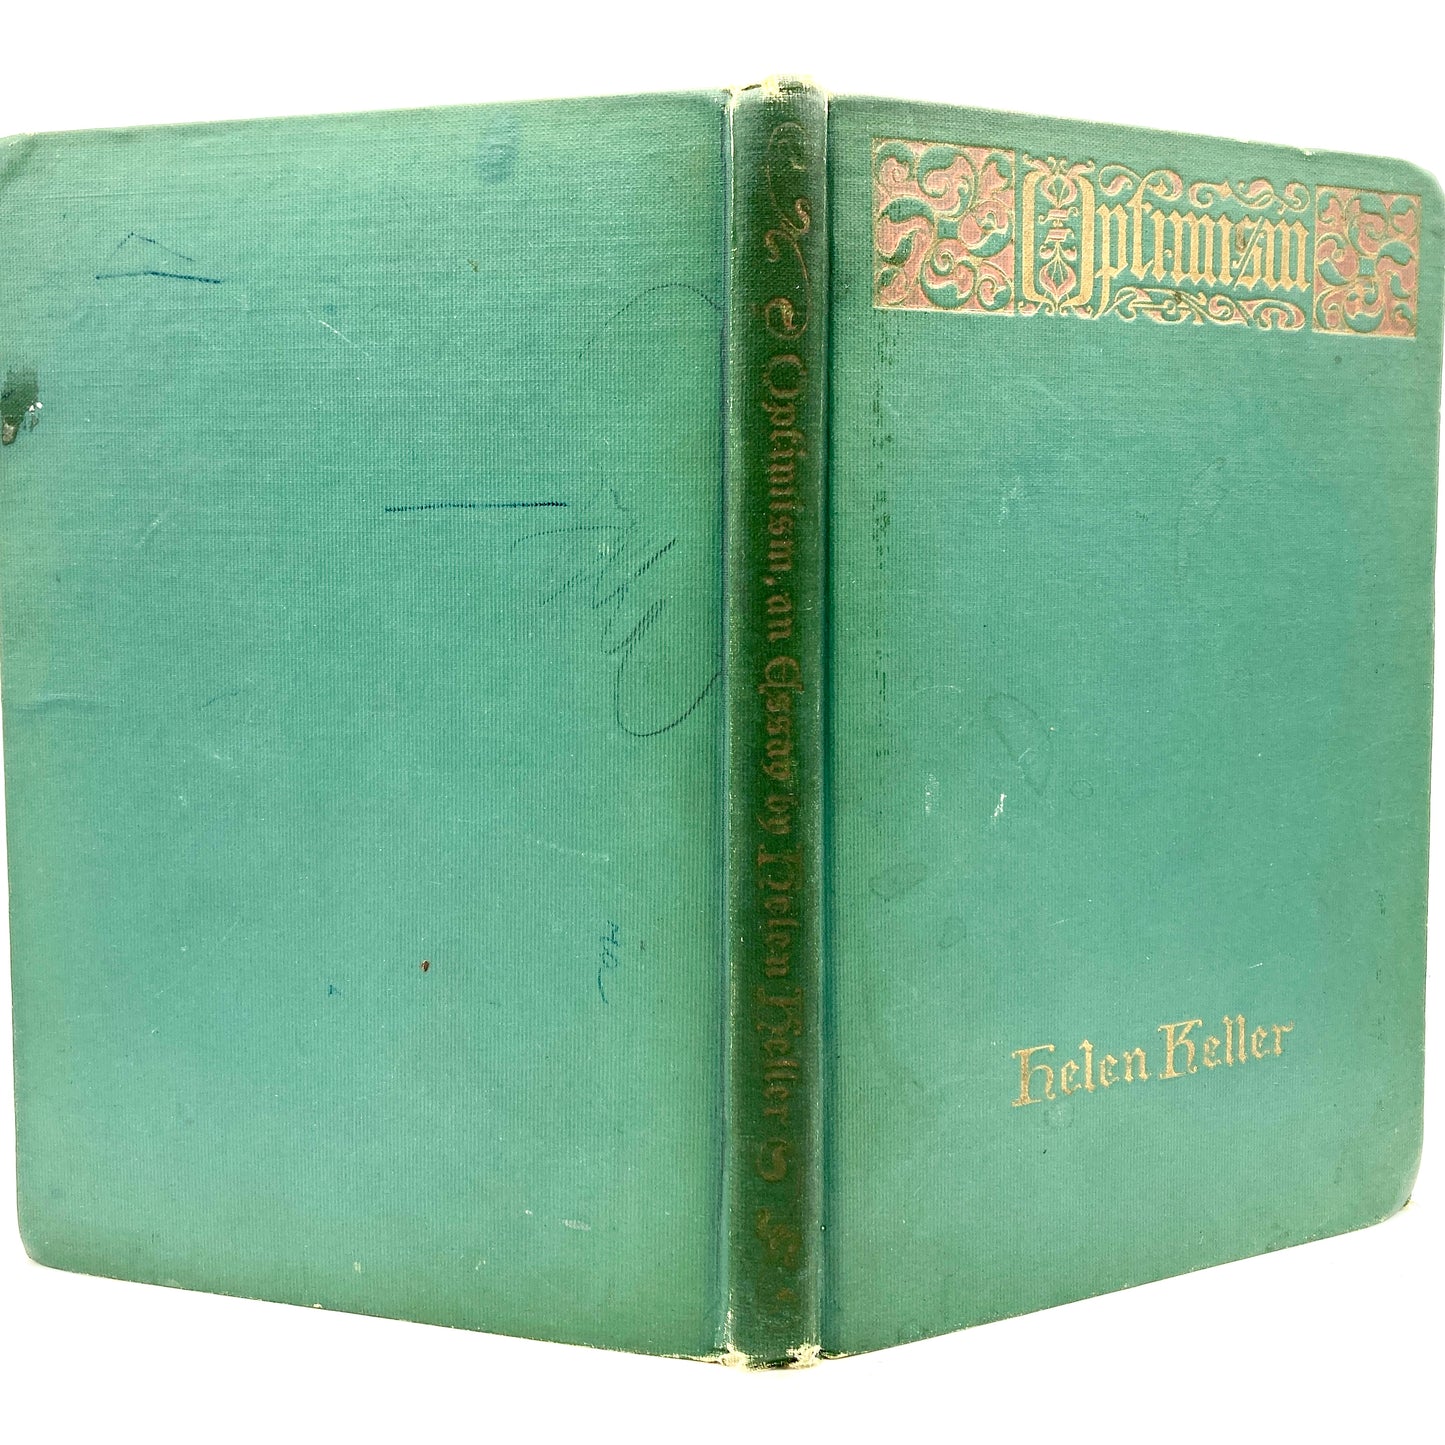 KELLER, Helen "Optimism" [Thomas Y. Crowell, 1903] 14th Thousand - Buzz Bookstore